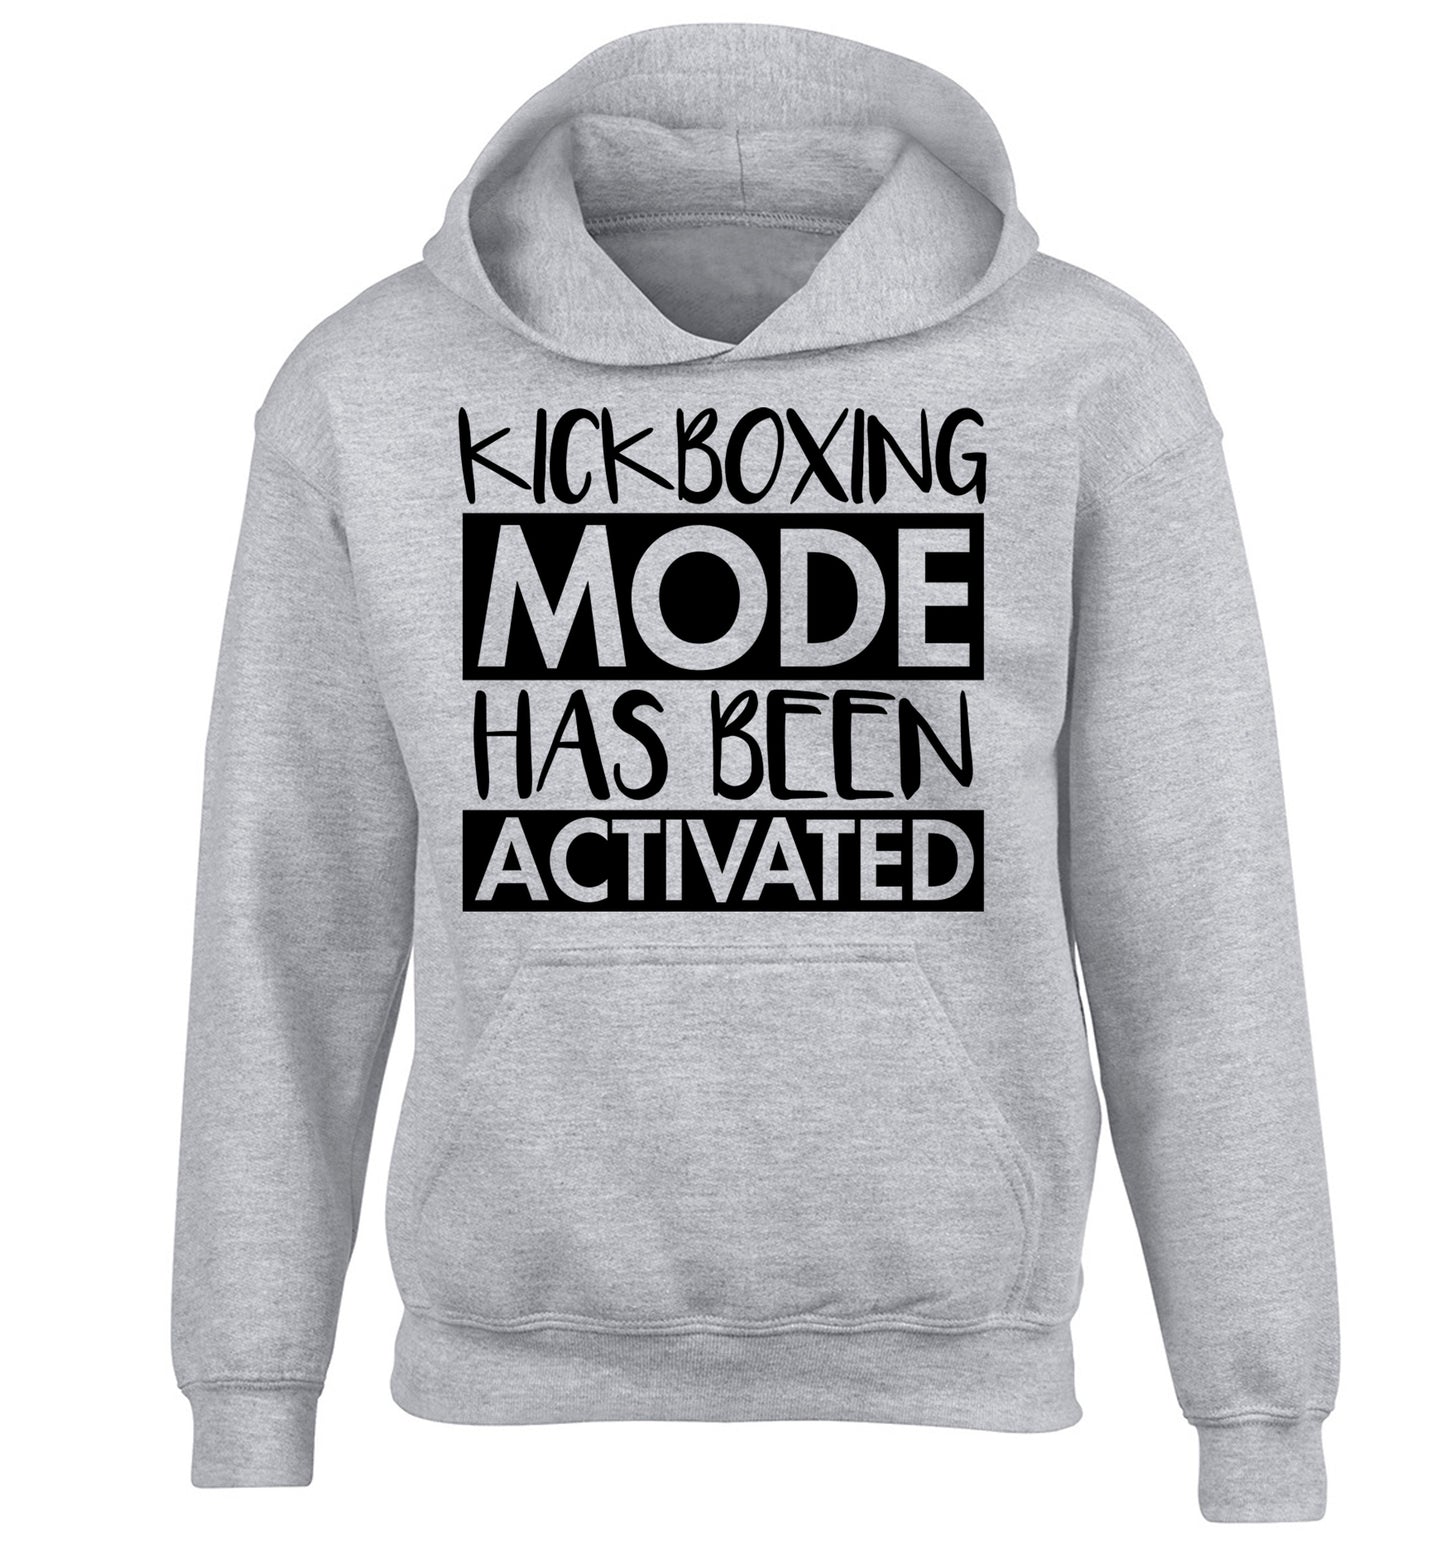 Kickboxing mode activated children's grey hoodie 12-14 Years